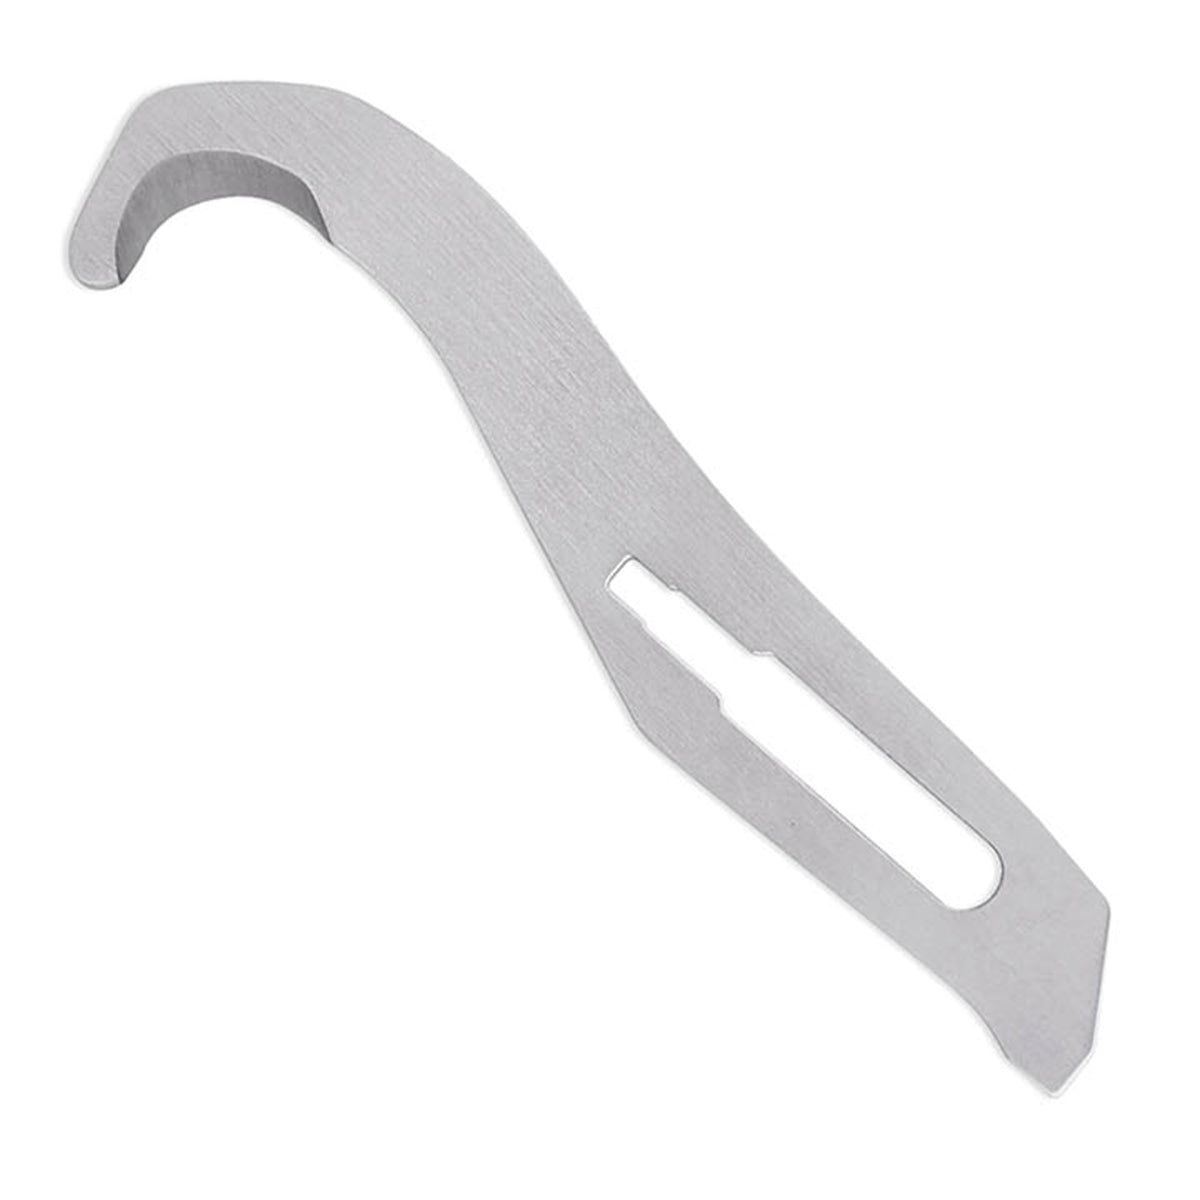 Havalon Piranta Gut Hook Replacement Blades - 3 Pack by Havalon Knives | Gear - goHUNT Shop